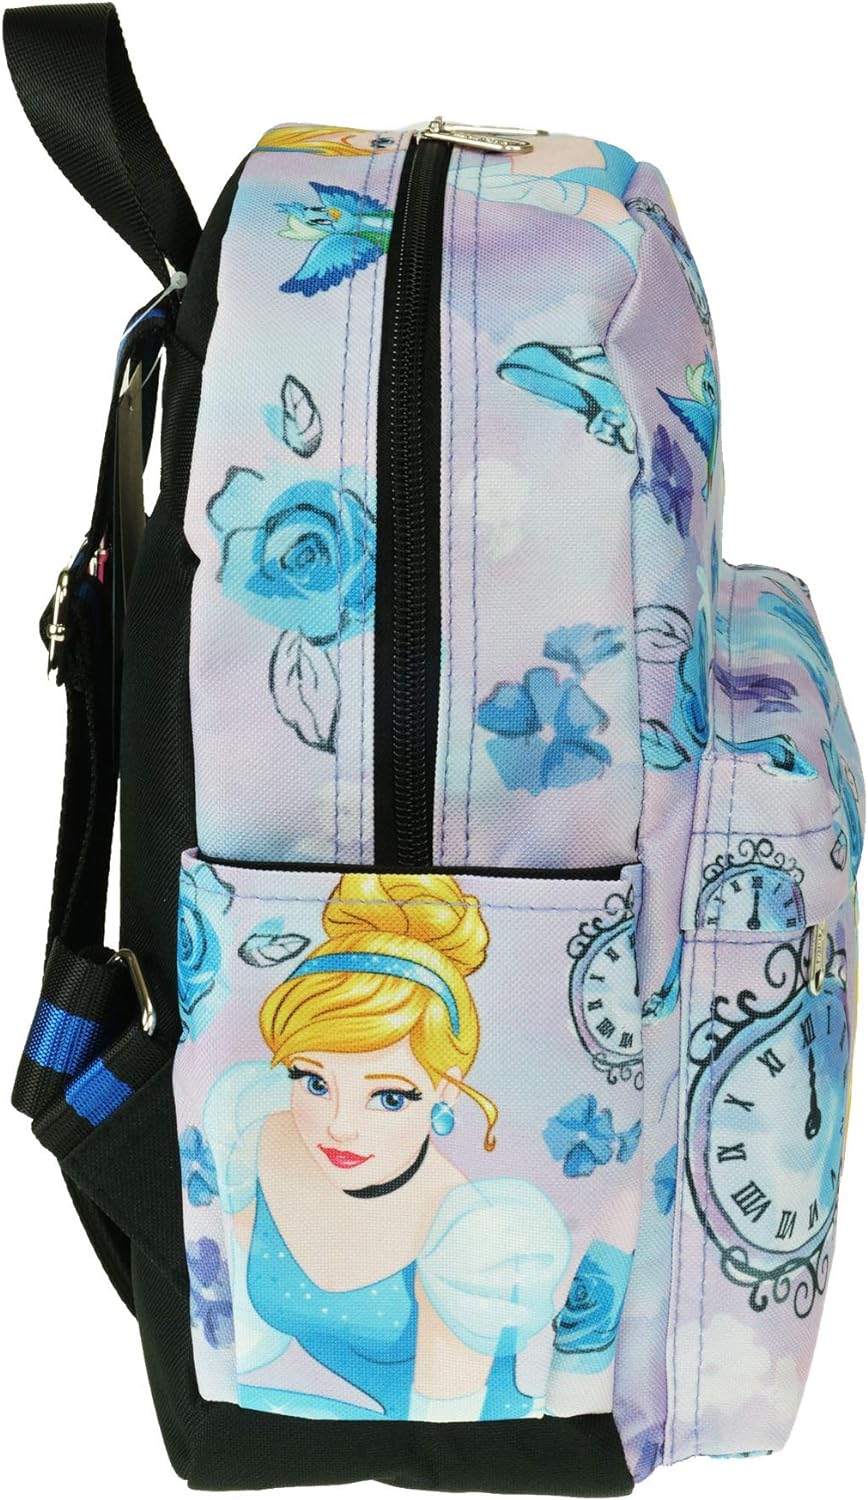 Disney Cinderella Backpack 12-inch Book Bag